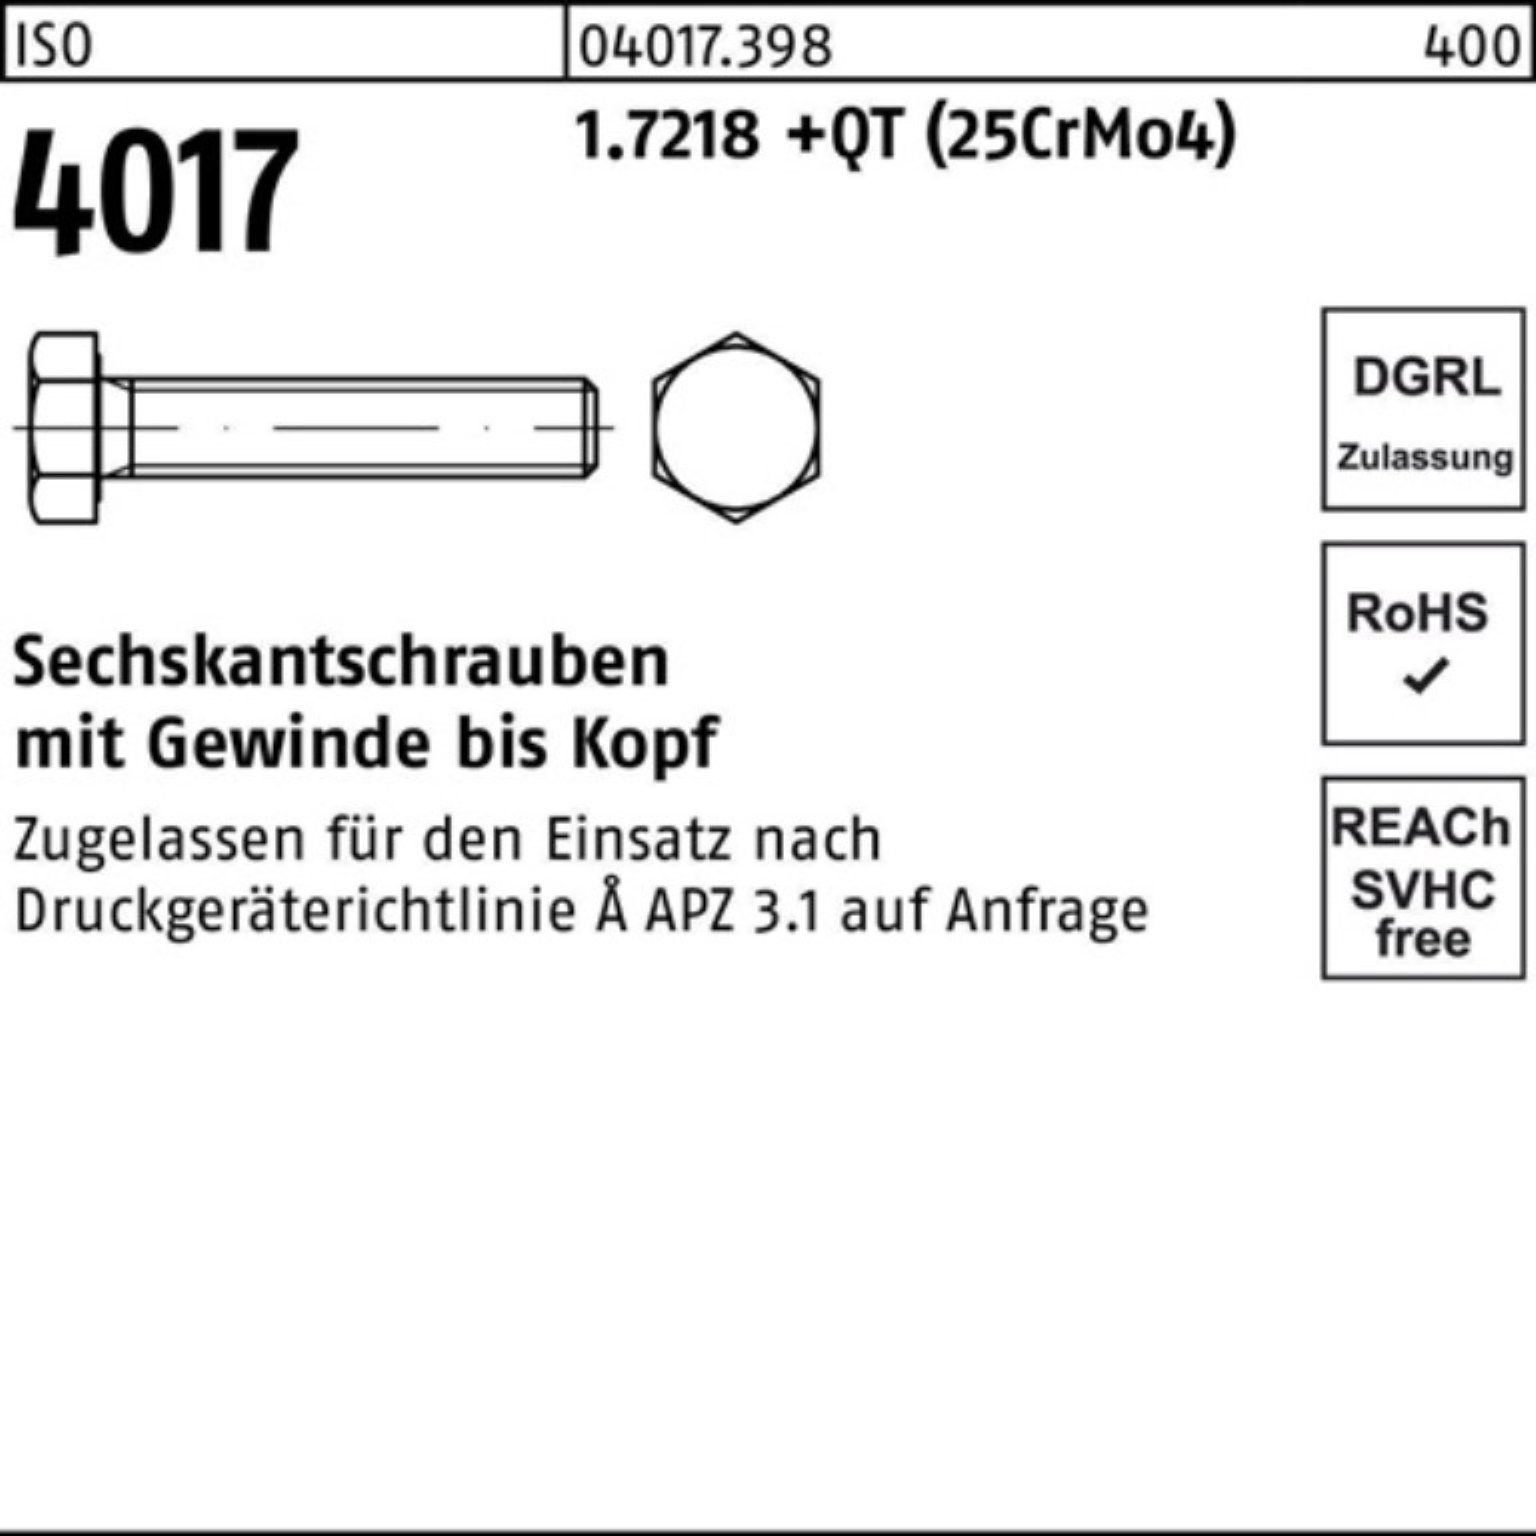 Sechskantschraube (25CrMo4) Bufab M24x Sechskantschraube 1.7218 65 +QT VG 100er 4017 ISO Pack